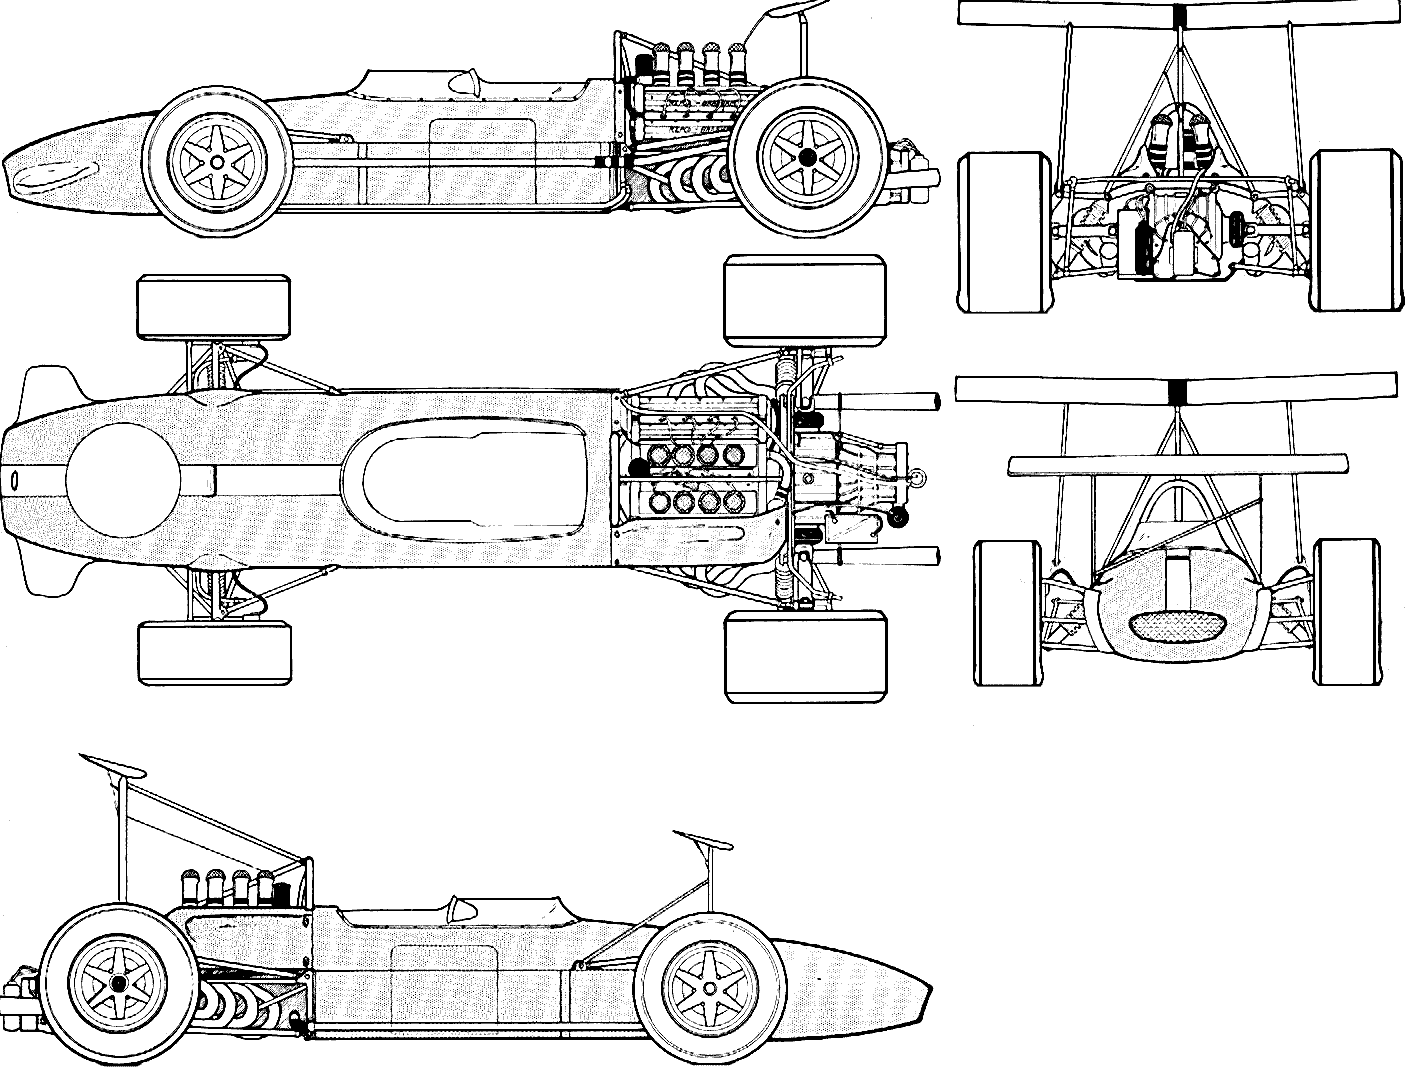 Brabham BT26 blueprint